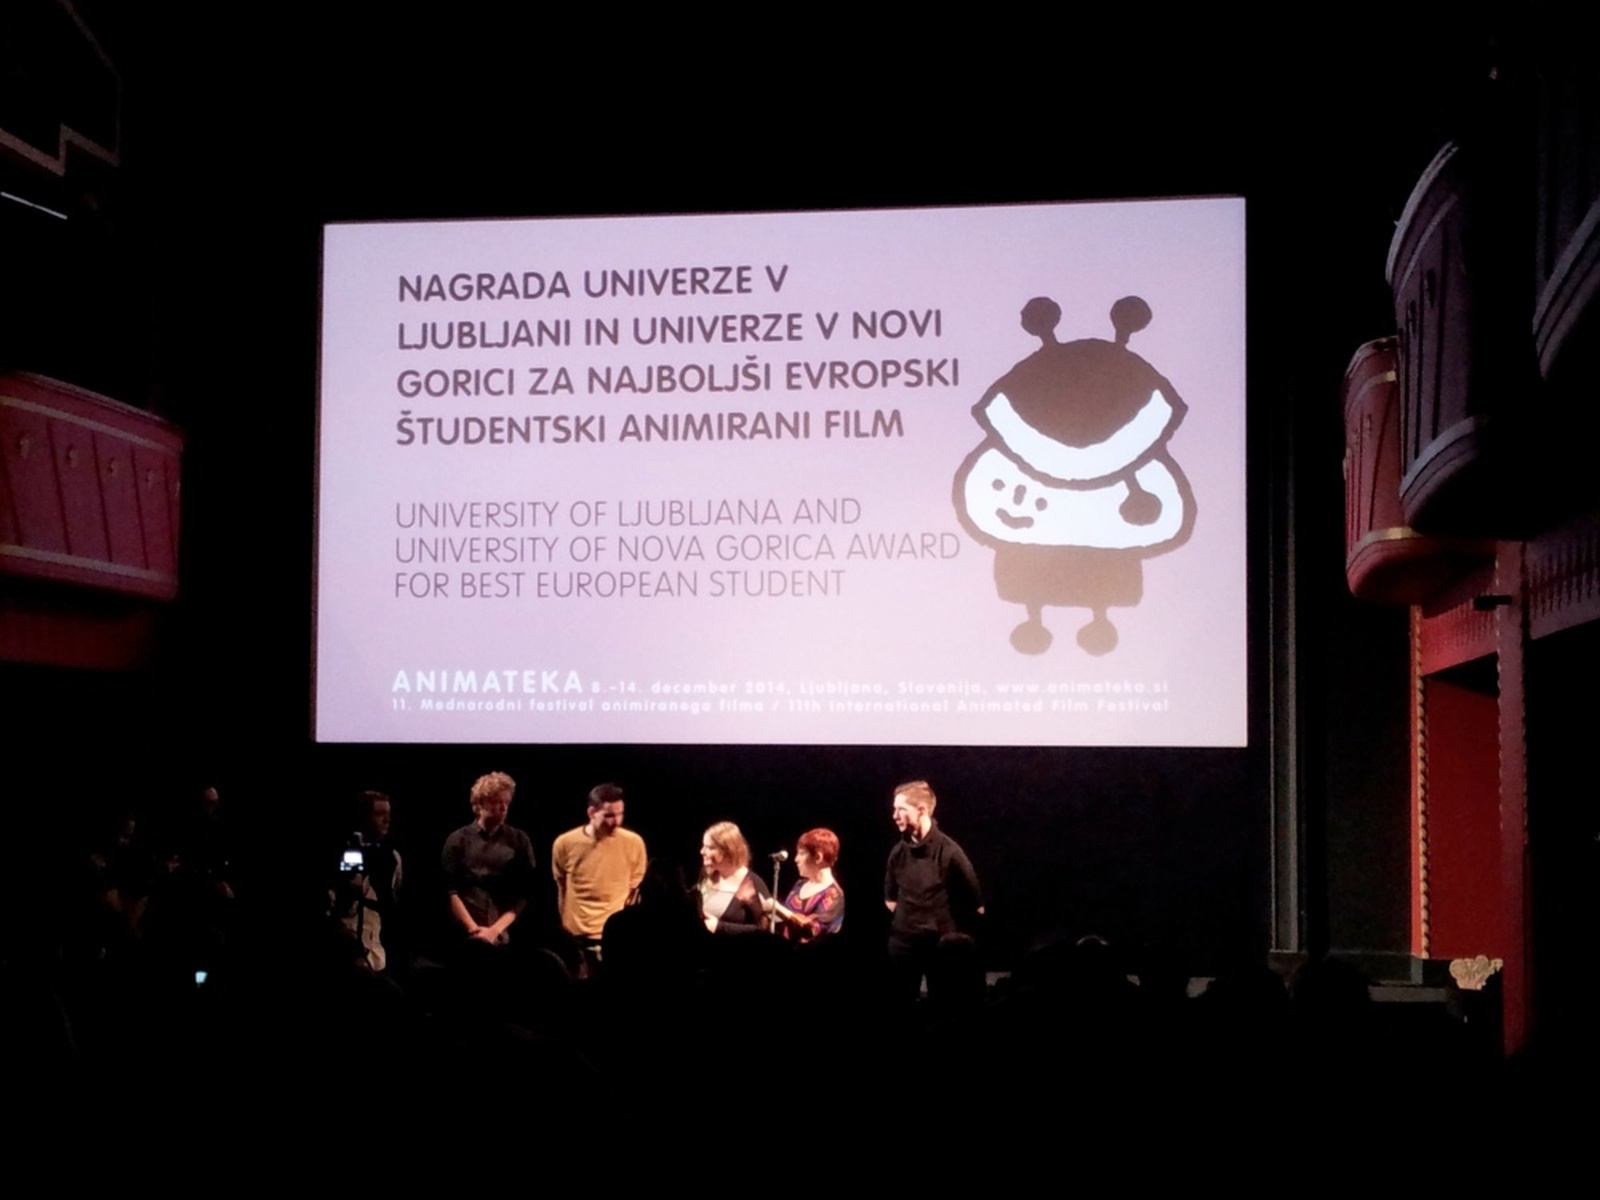 Animateka – The Award of the University of Nova Gorica for the Film “The Shirley Temple”